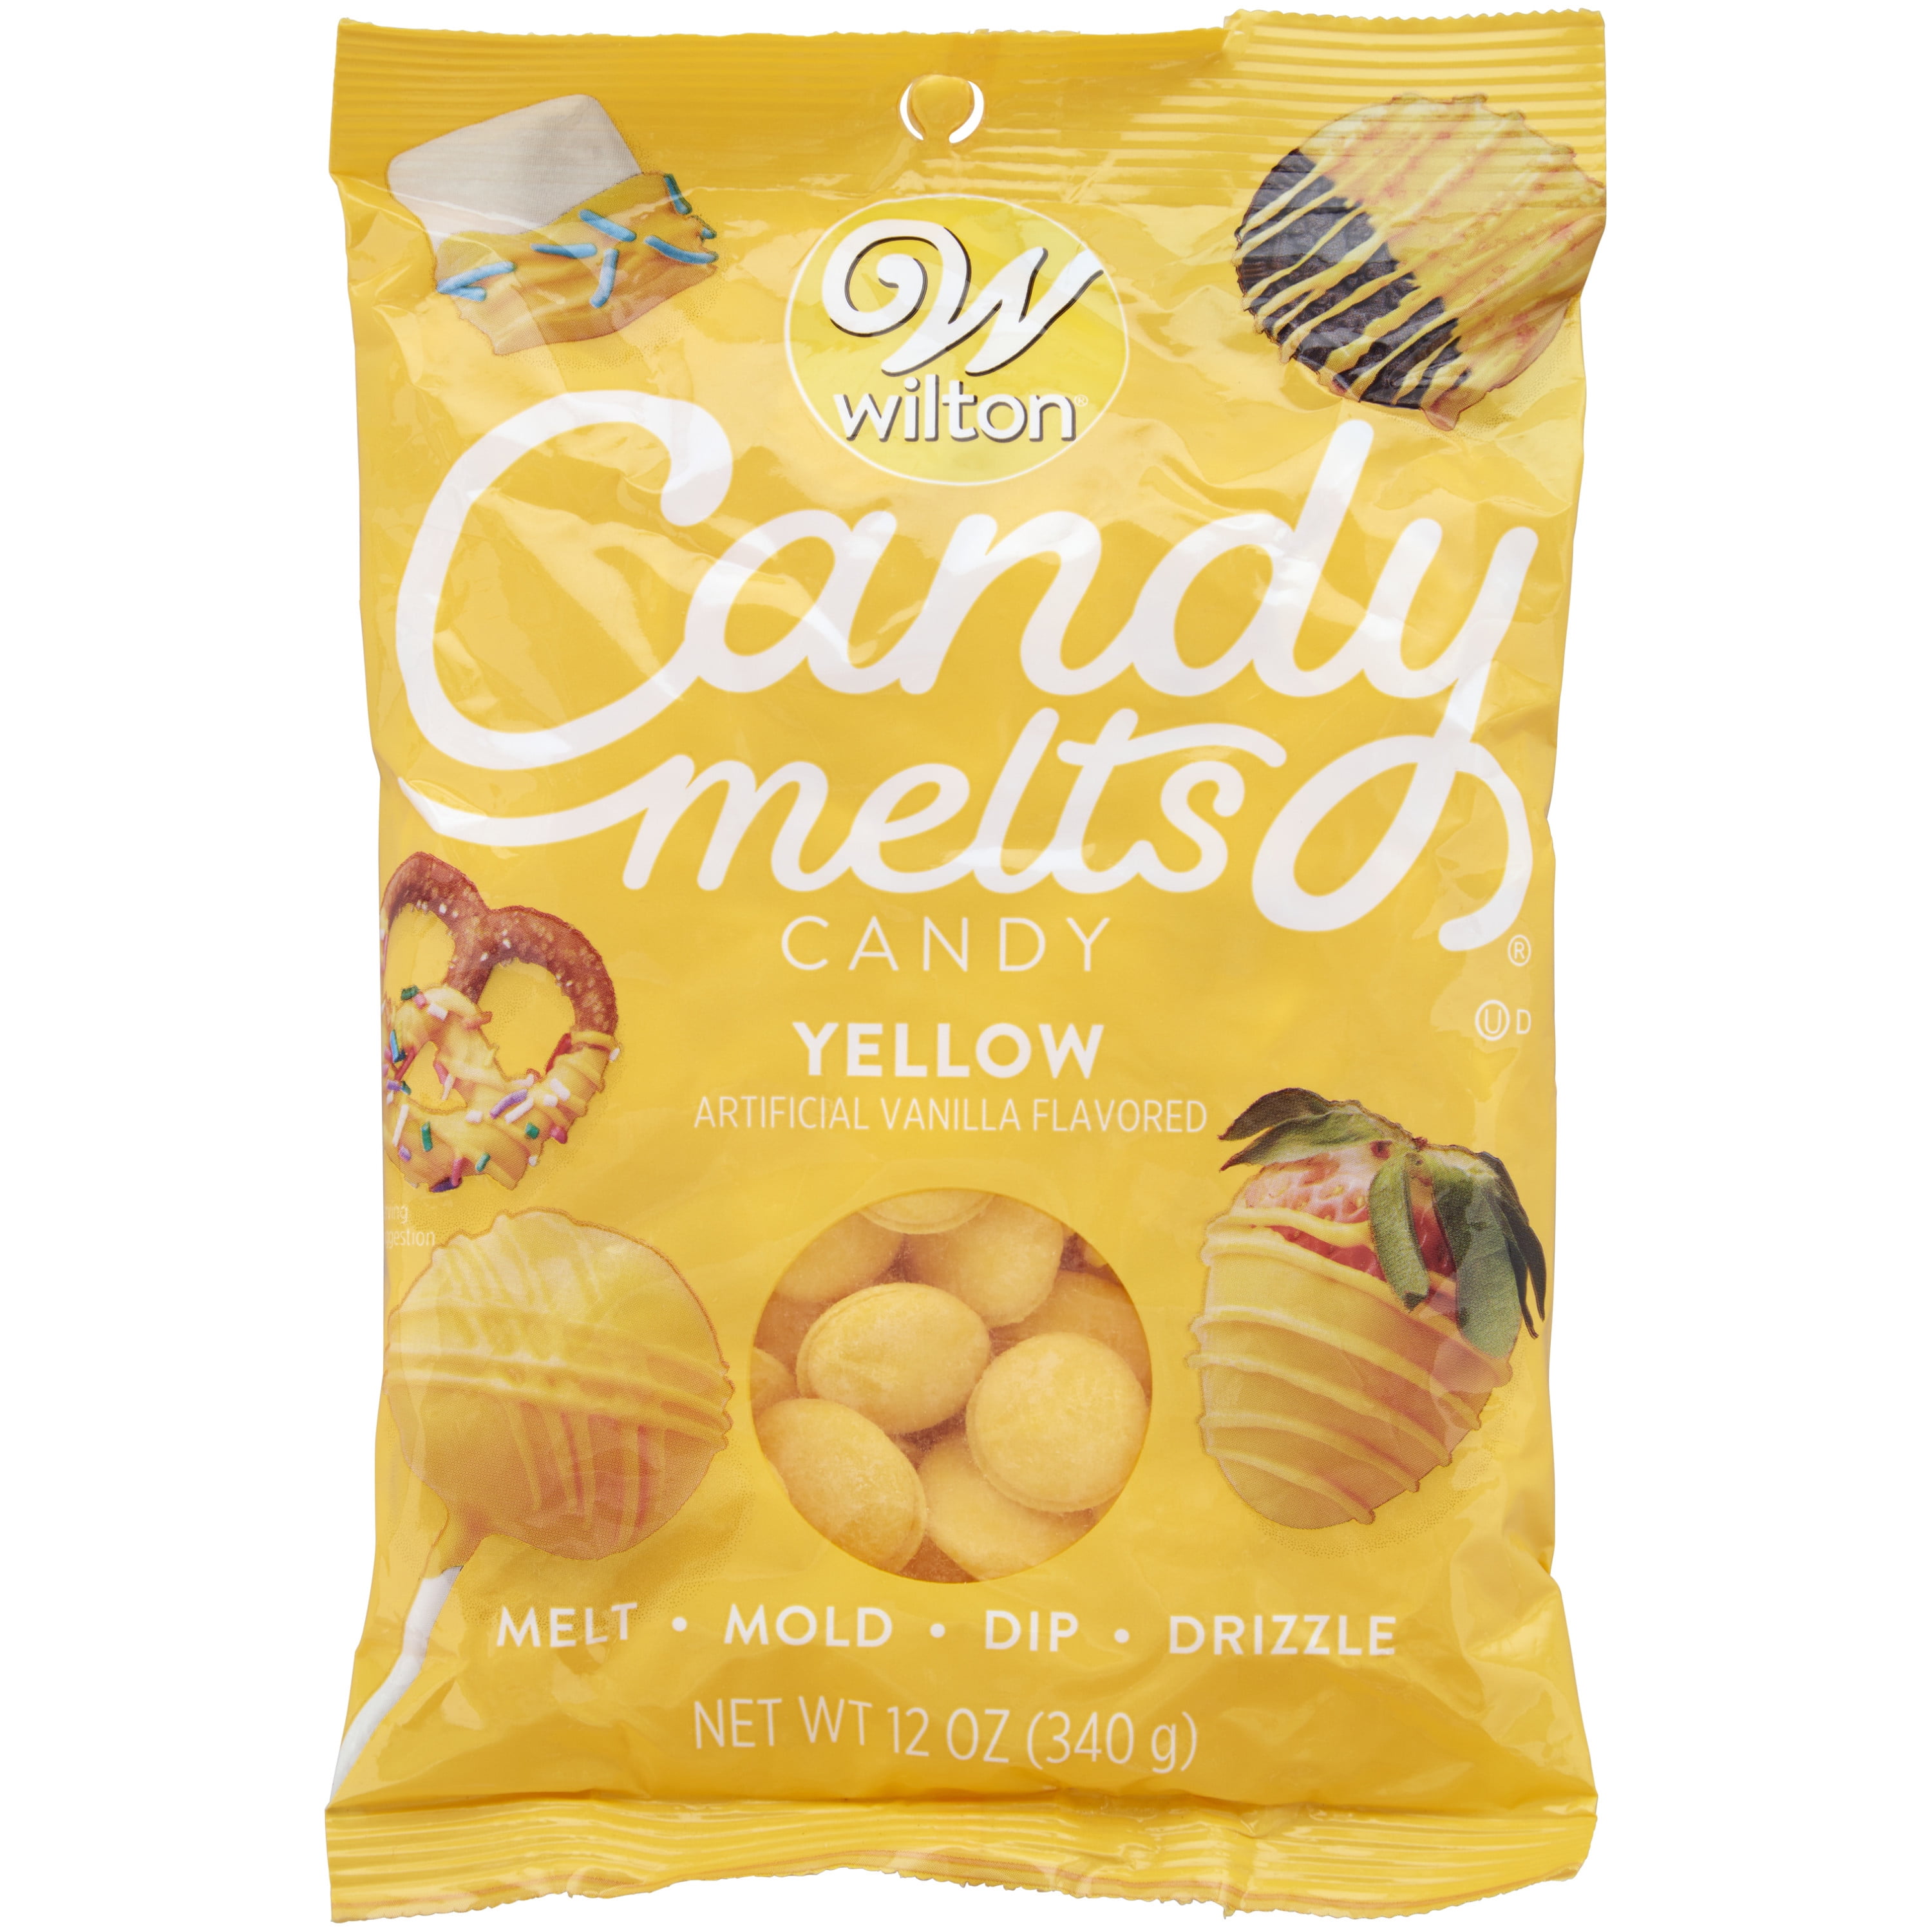 Wilton Yellow Candy Melts Candy, 12 oz.